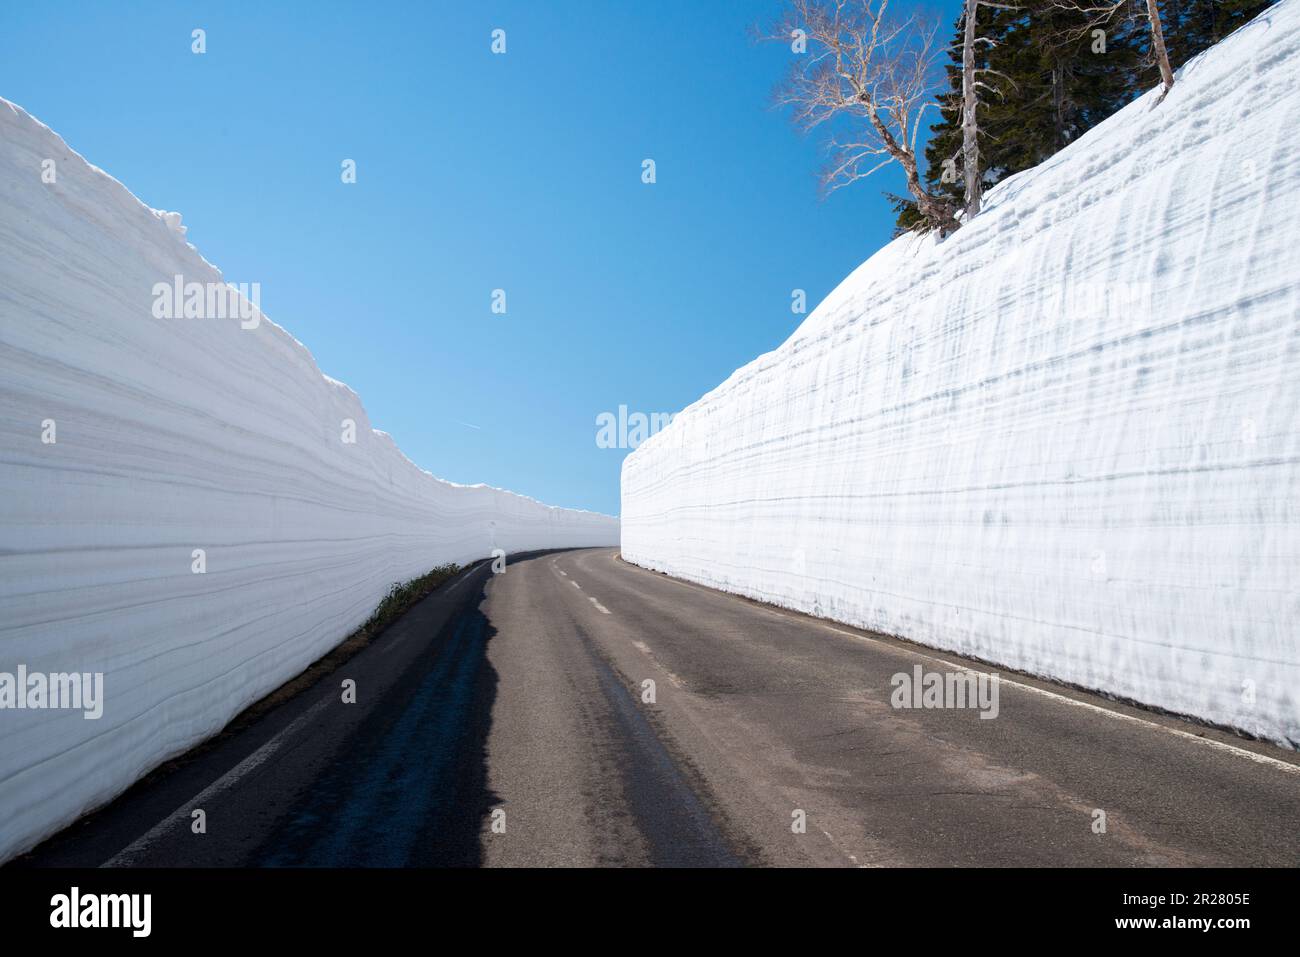 Mount Hachimantai Aspiteline snowy circuit Stock Photo